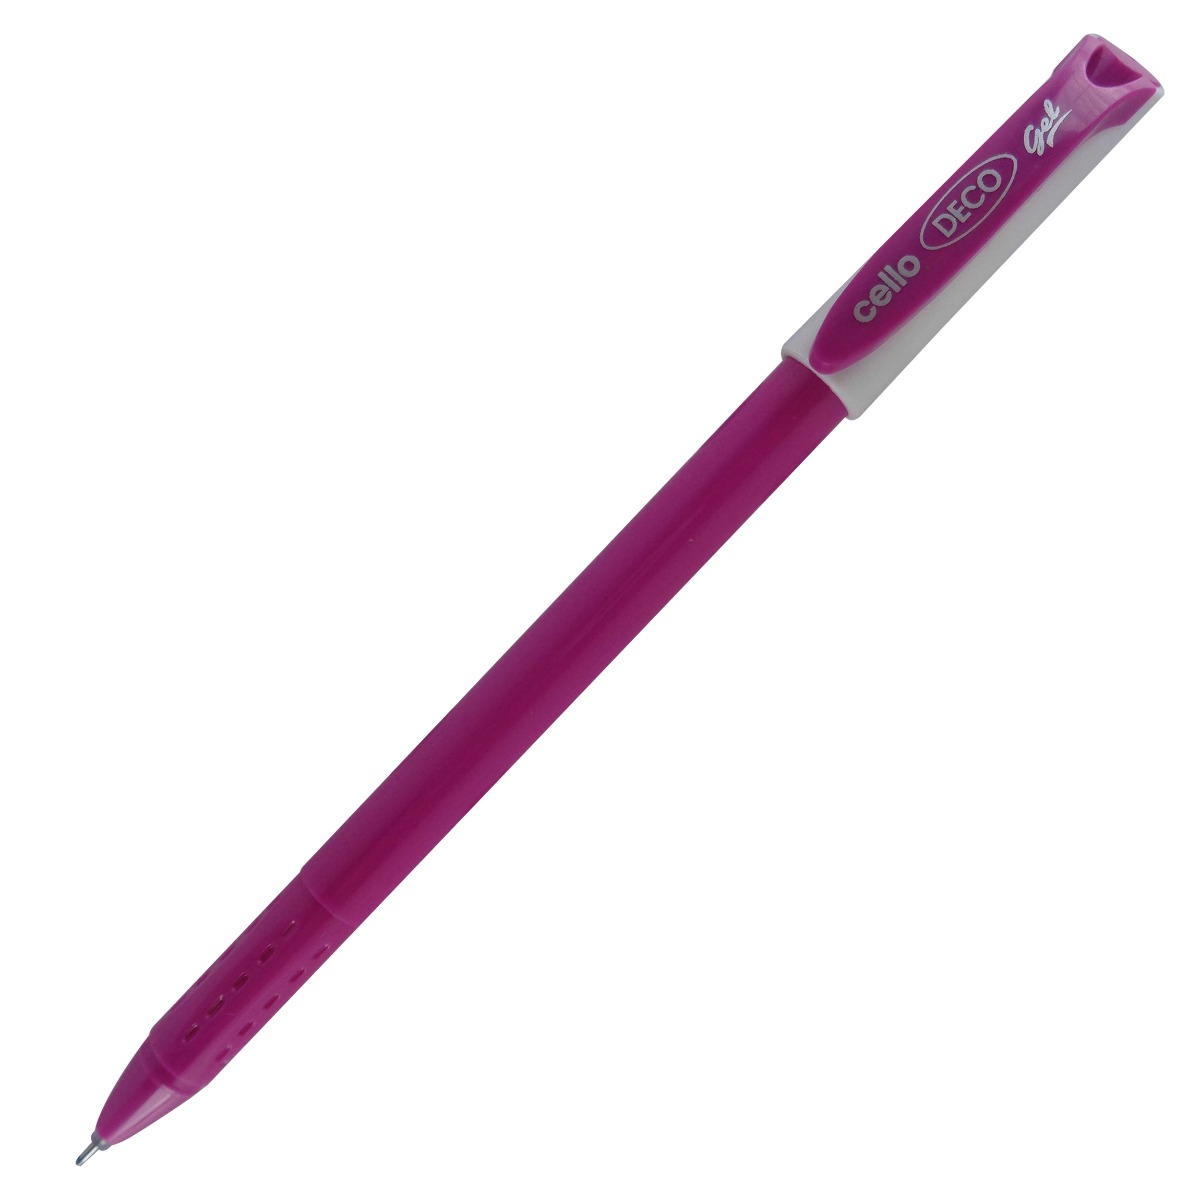 Cello Model: 14895 Deco Gel Pink color body with white cap Blue ink fine tip cap type gel pen